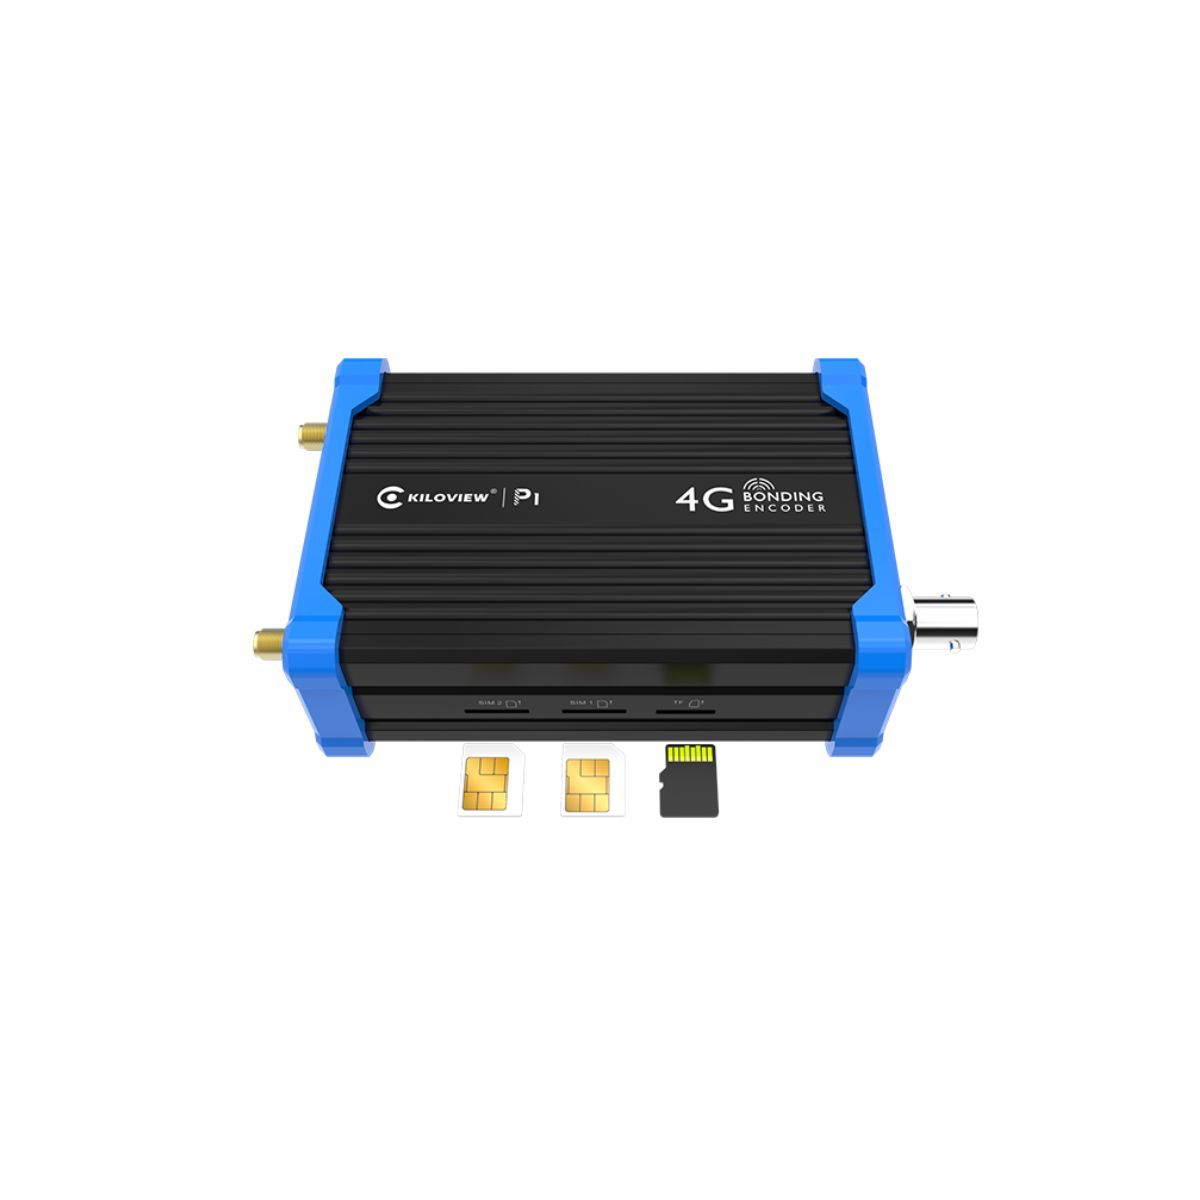 Kiloview P1 4G Bonding SDI Video Encoder